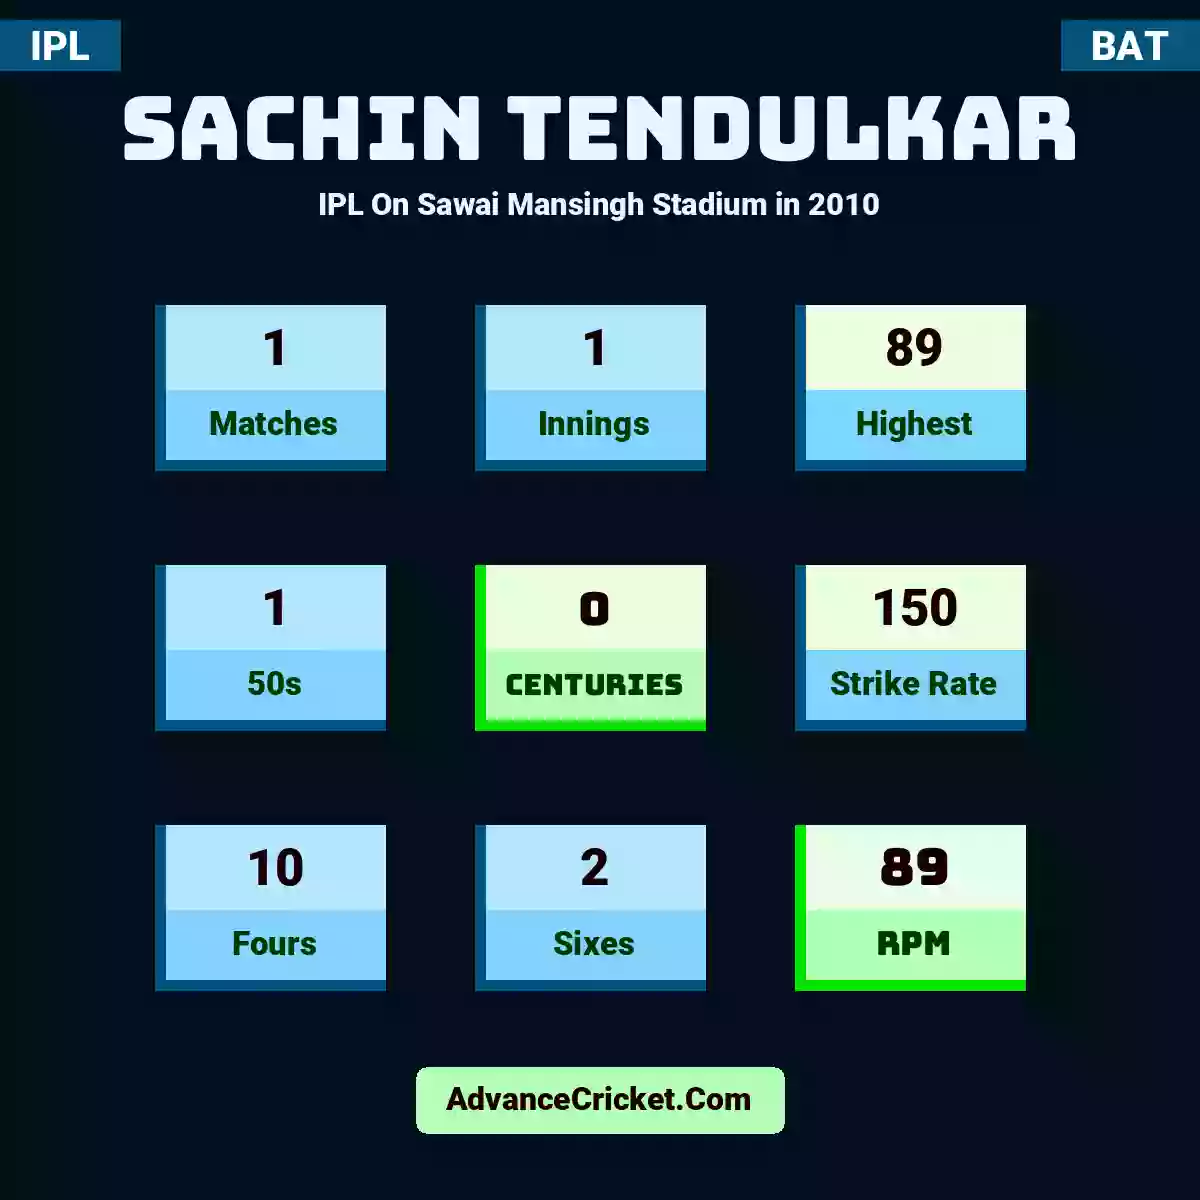 Sachin Tendulkar IPL  On Sawai Mansingh Stadium in 2010, Sachin Tendulkar played 1 matches, scored 89 runs as highest, 1 half-centuries, and 0 centuries, with a strike rate of 150. S.Tendulkar hit 10 fours and 2 sixes, with an RPM of 89.